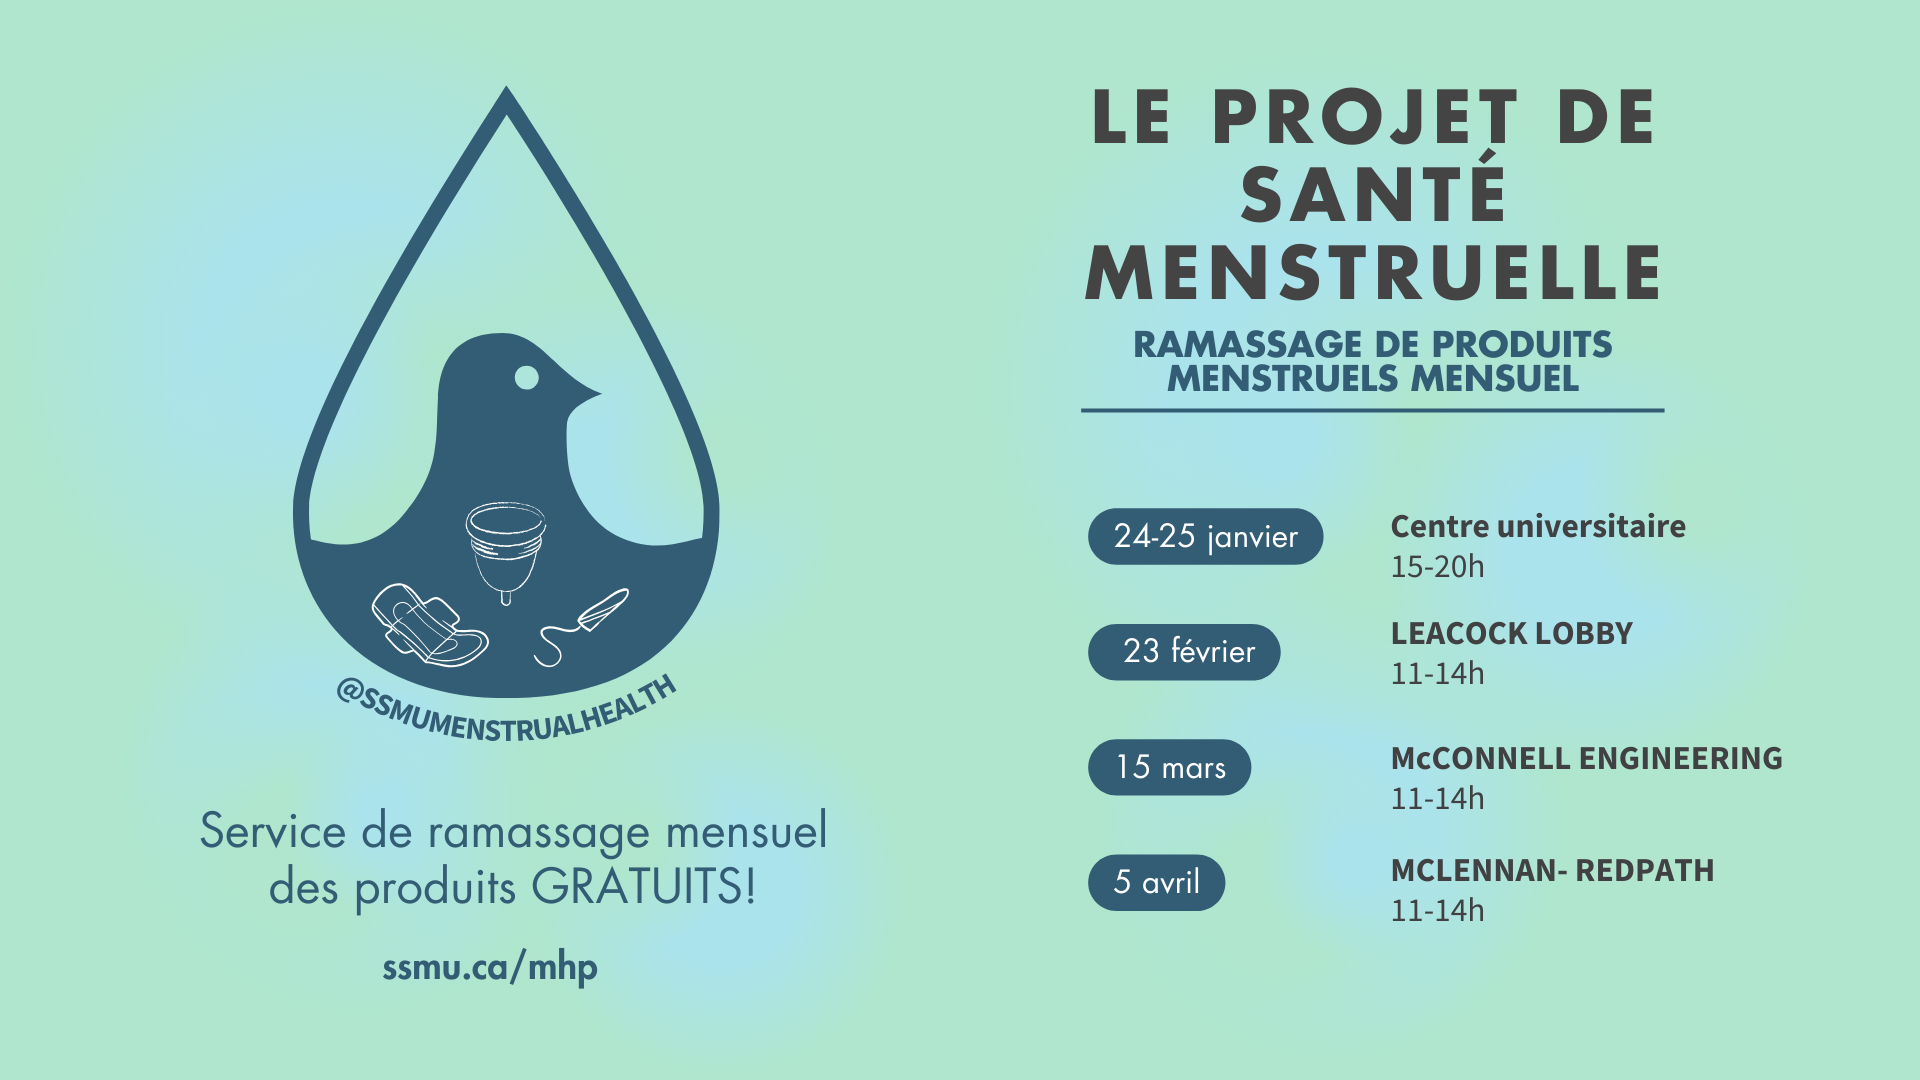 Ramassage de produits menstruels mensuel